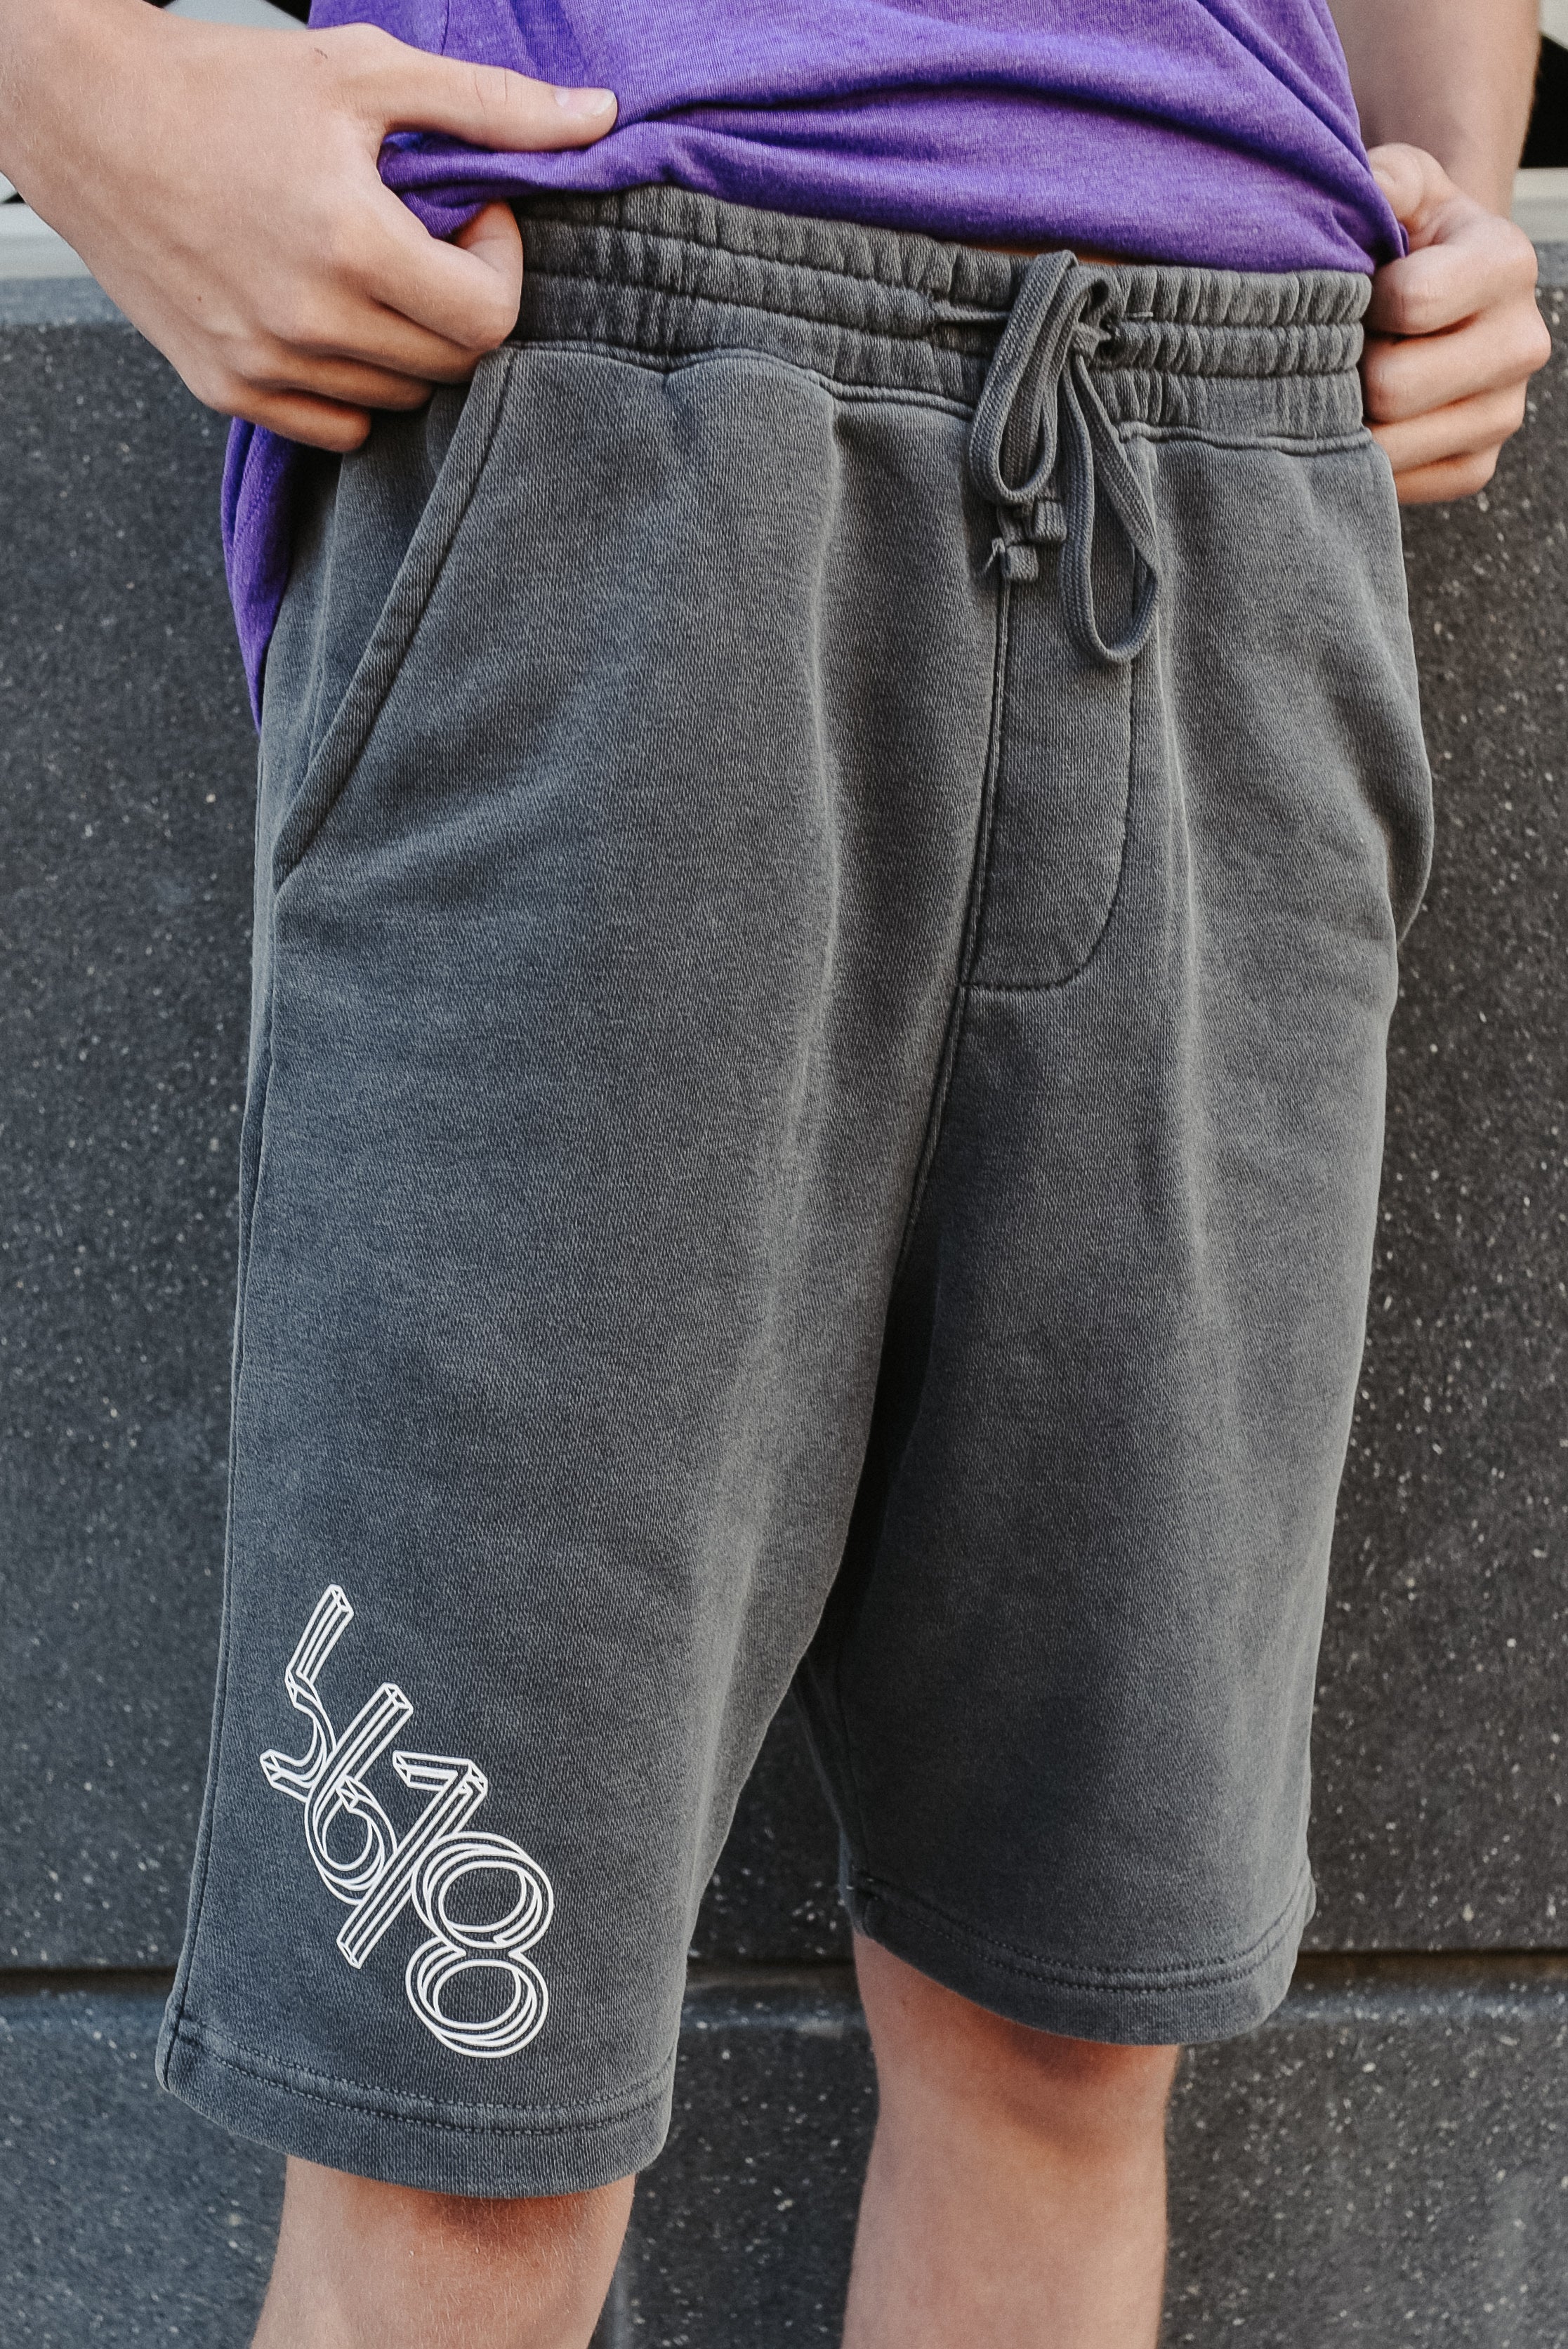 5678 Branded Shorts - Grey – 5678 Apparel